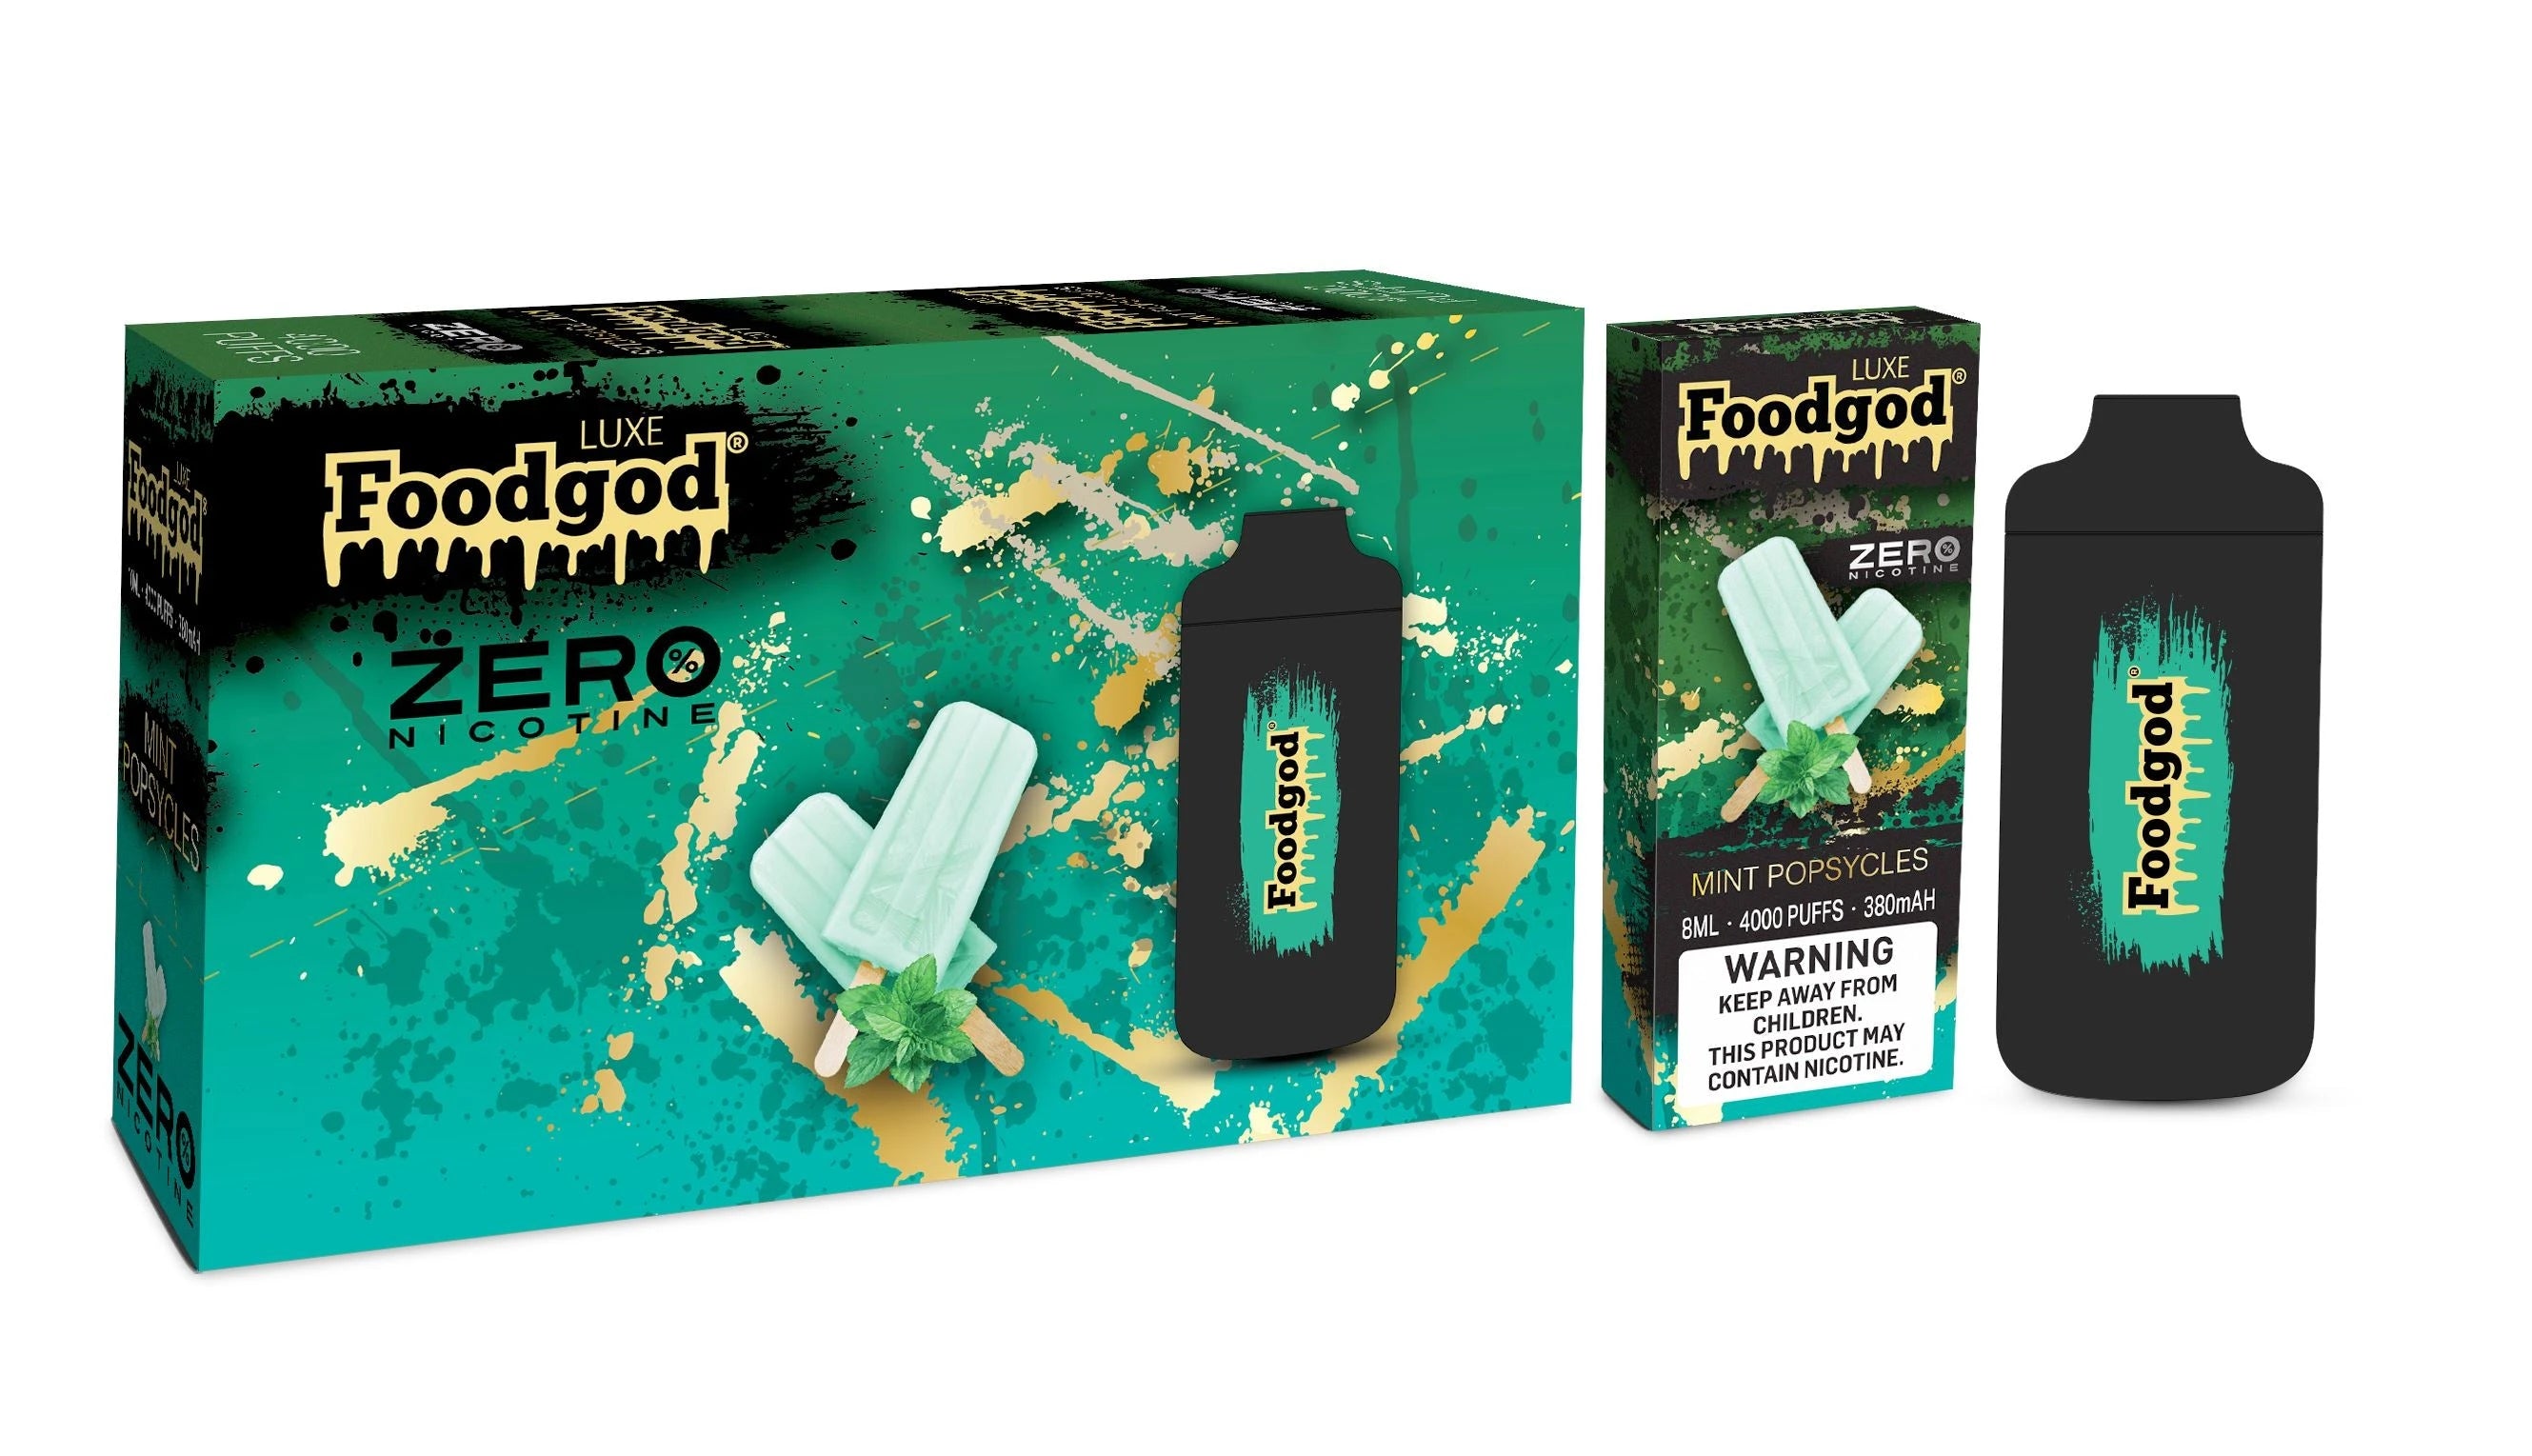 Foodgod Luxe Zero Nicotine 4000 Puff Disposable Vape - 6 Pack